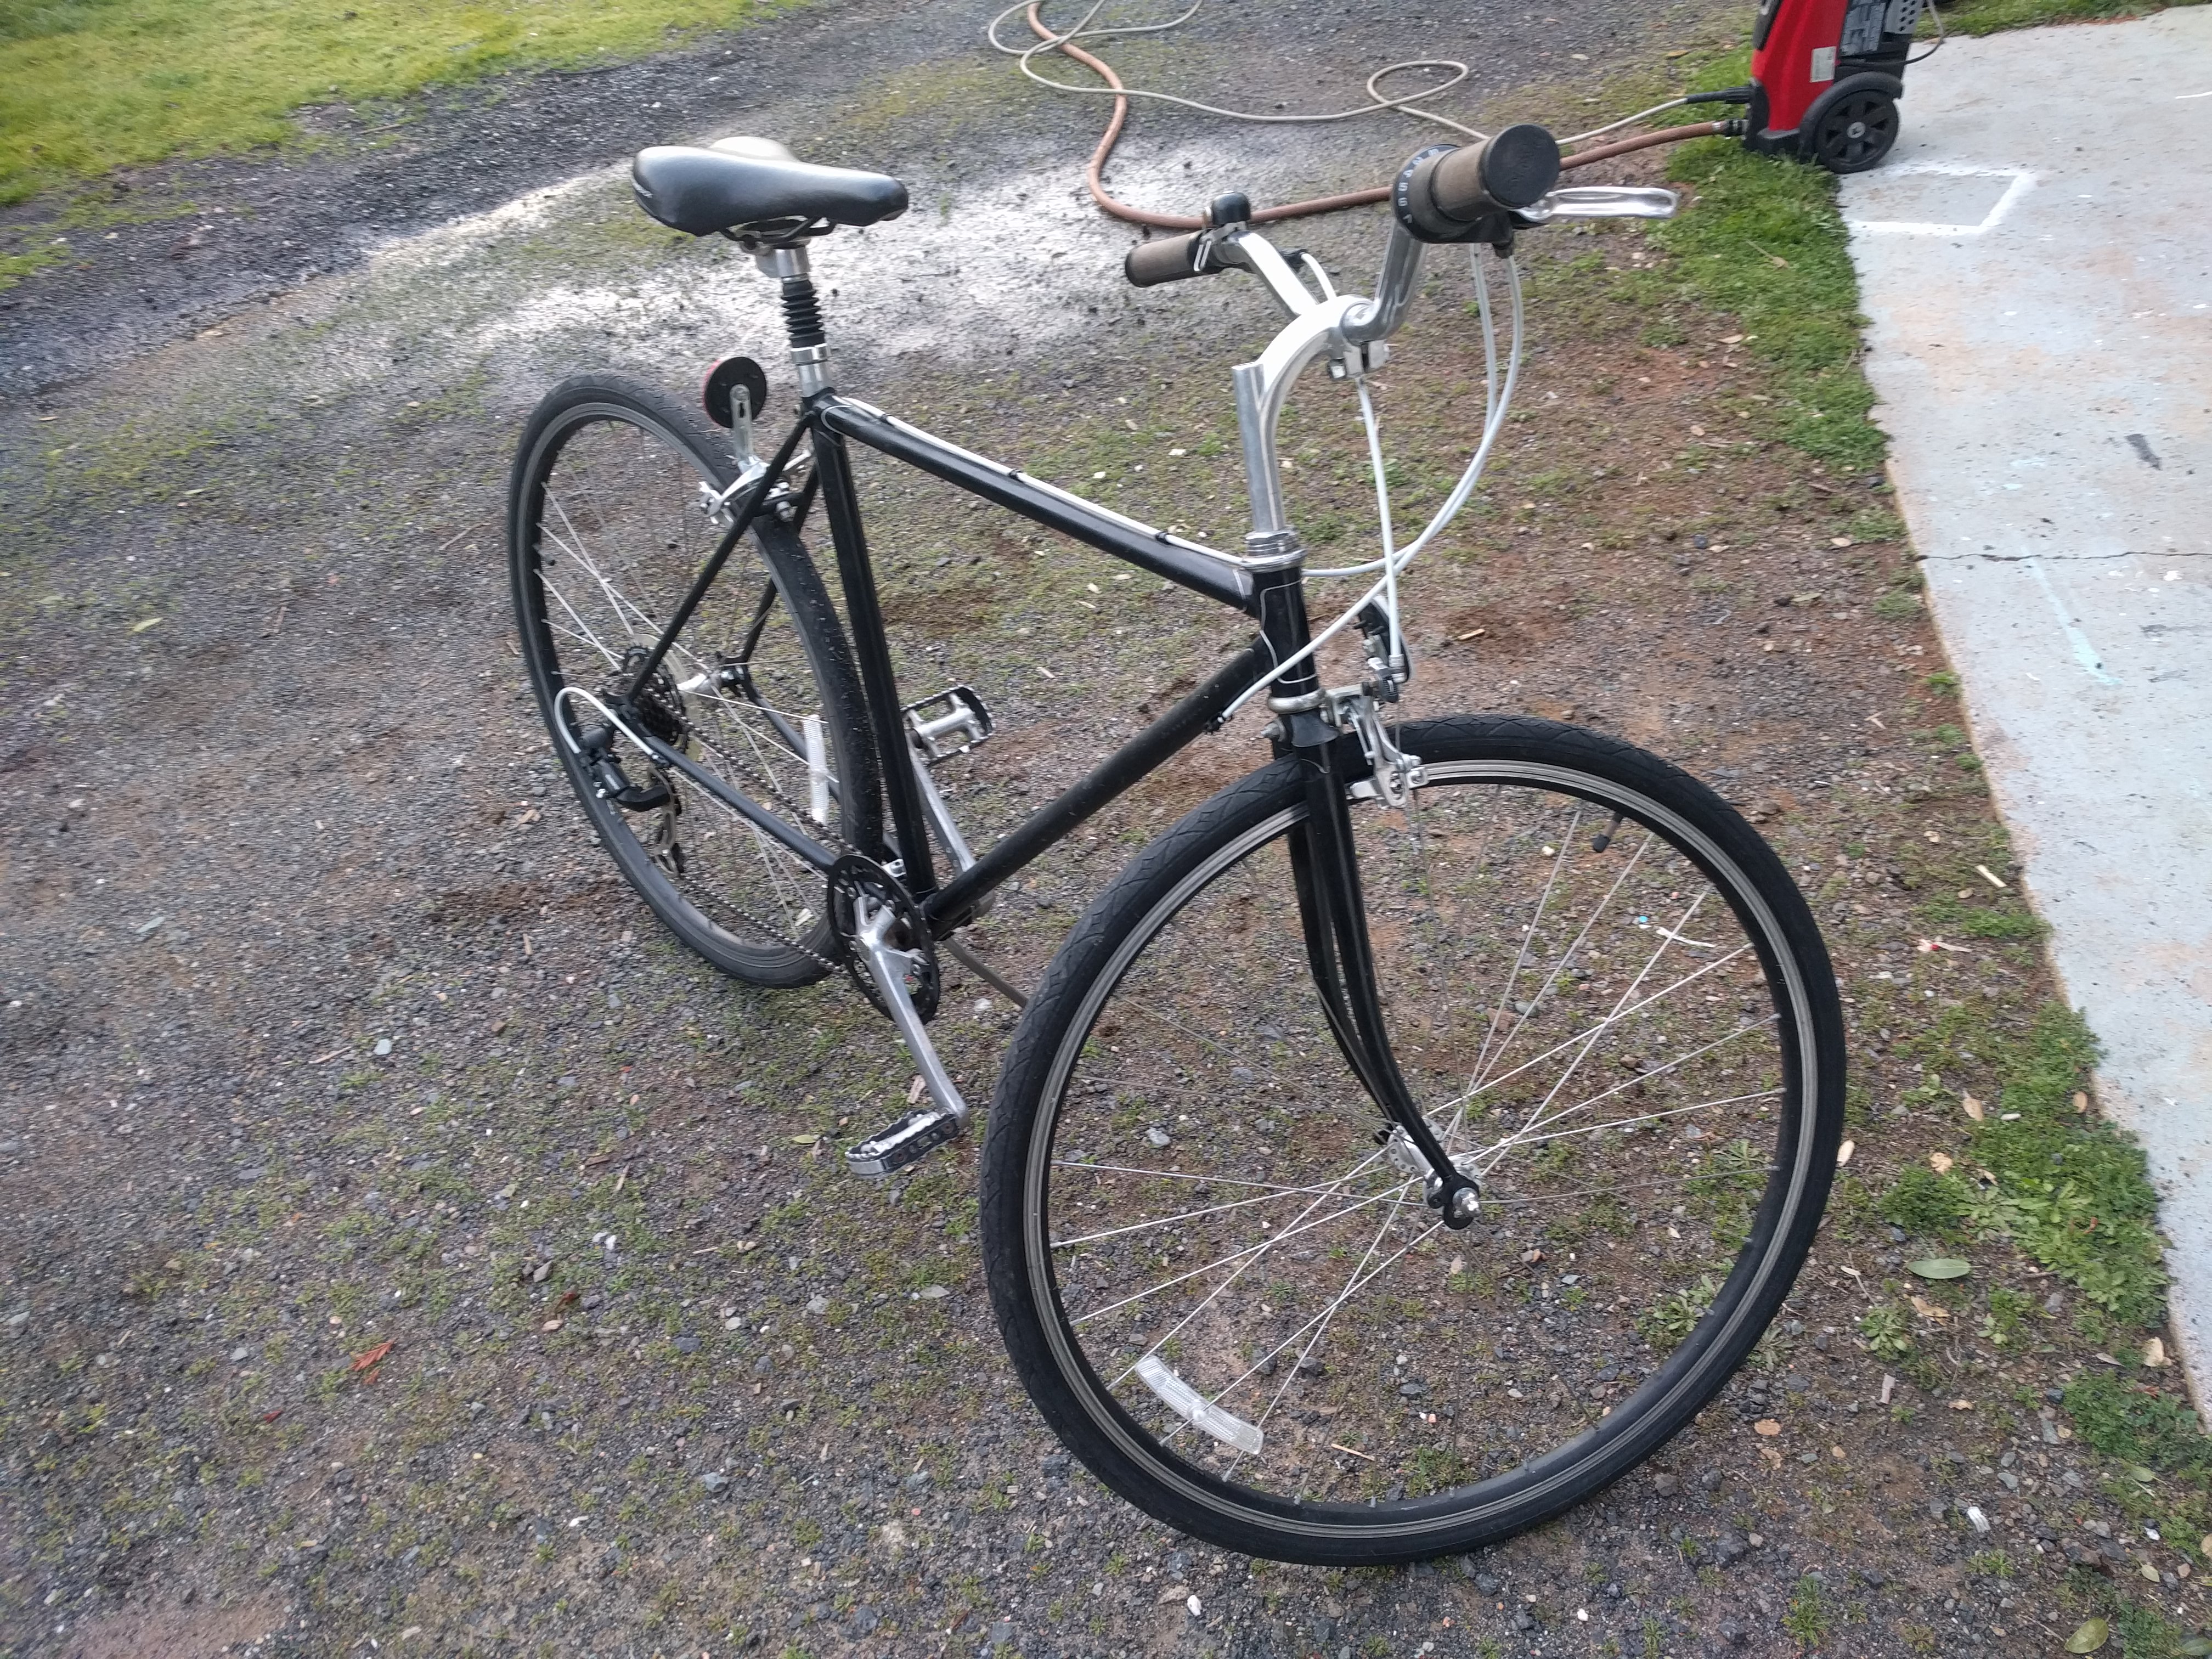 Rebuilt Black Bicycle